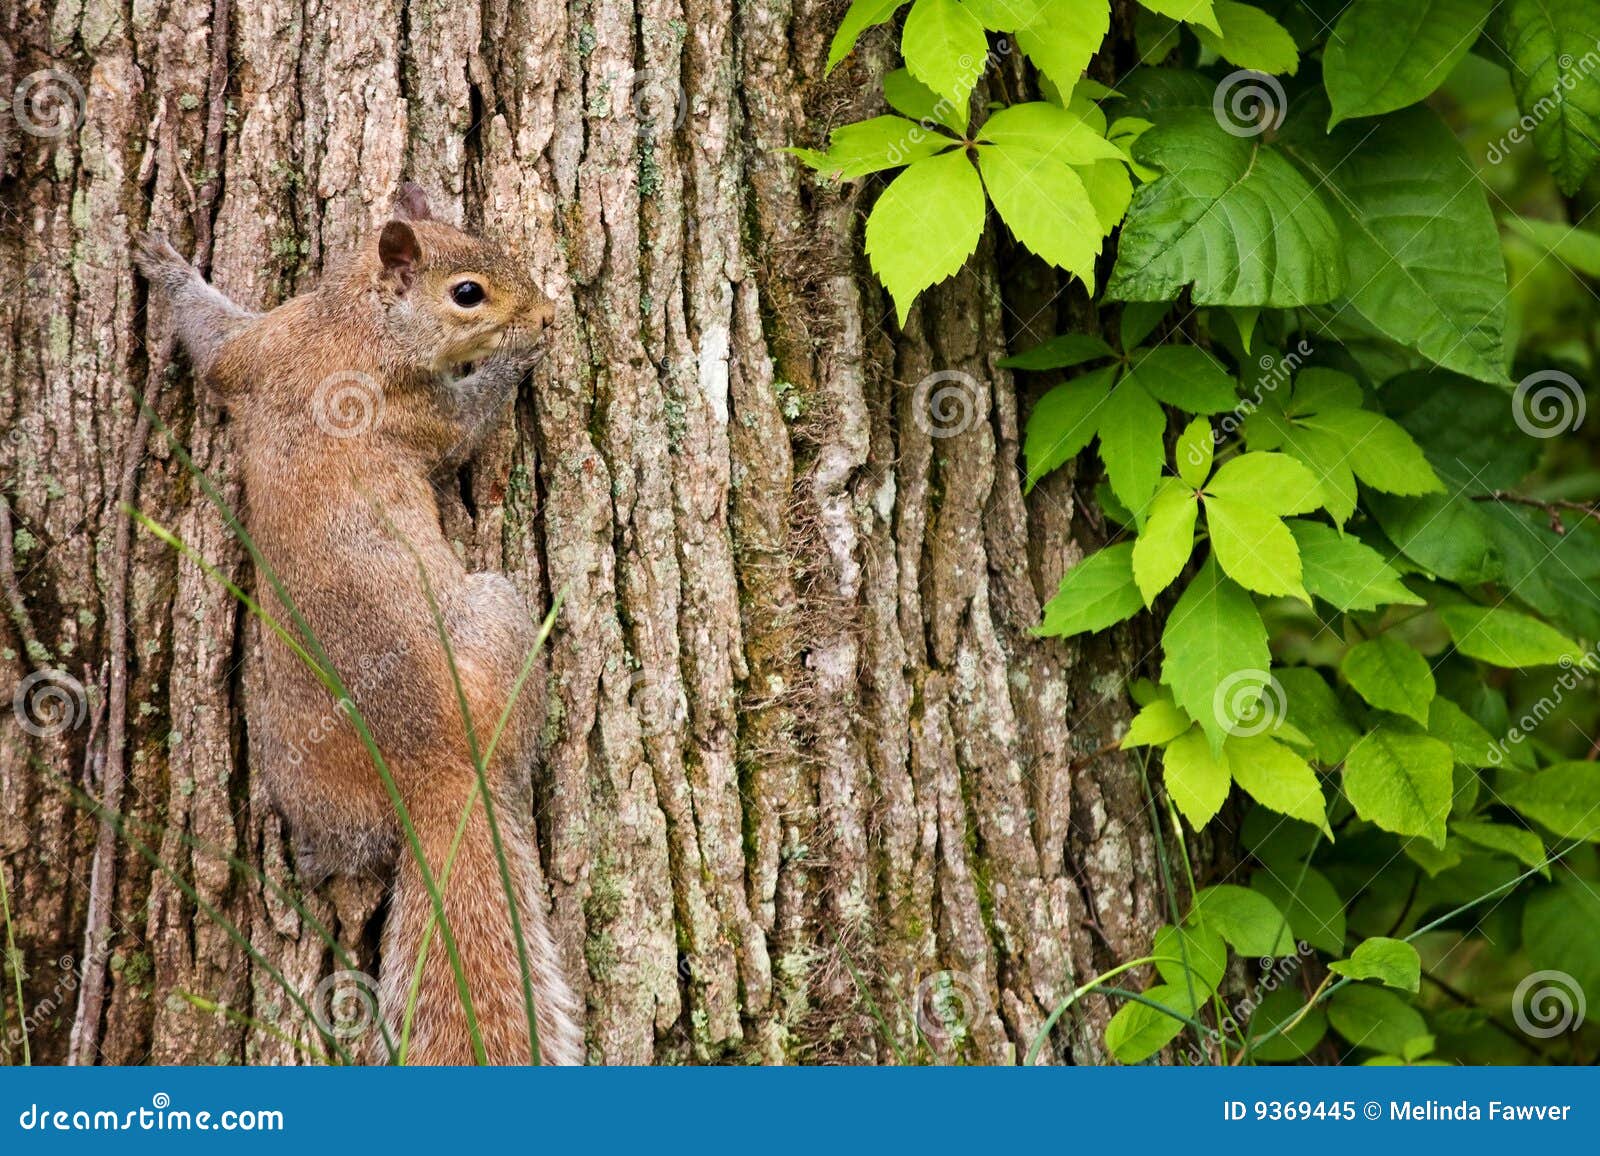 squirrel with virginia creeper